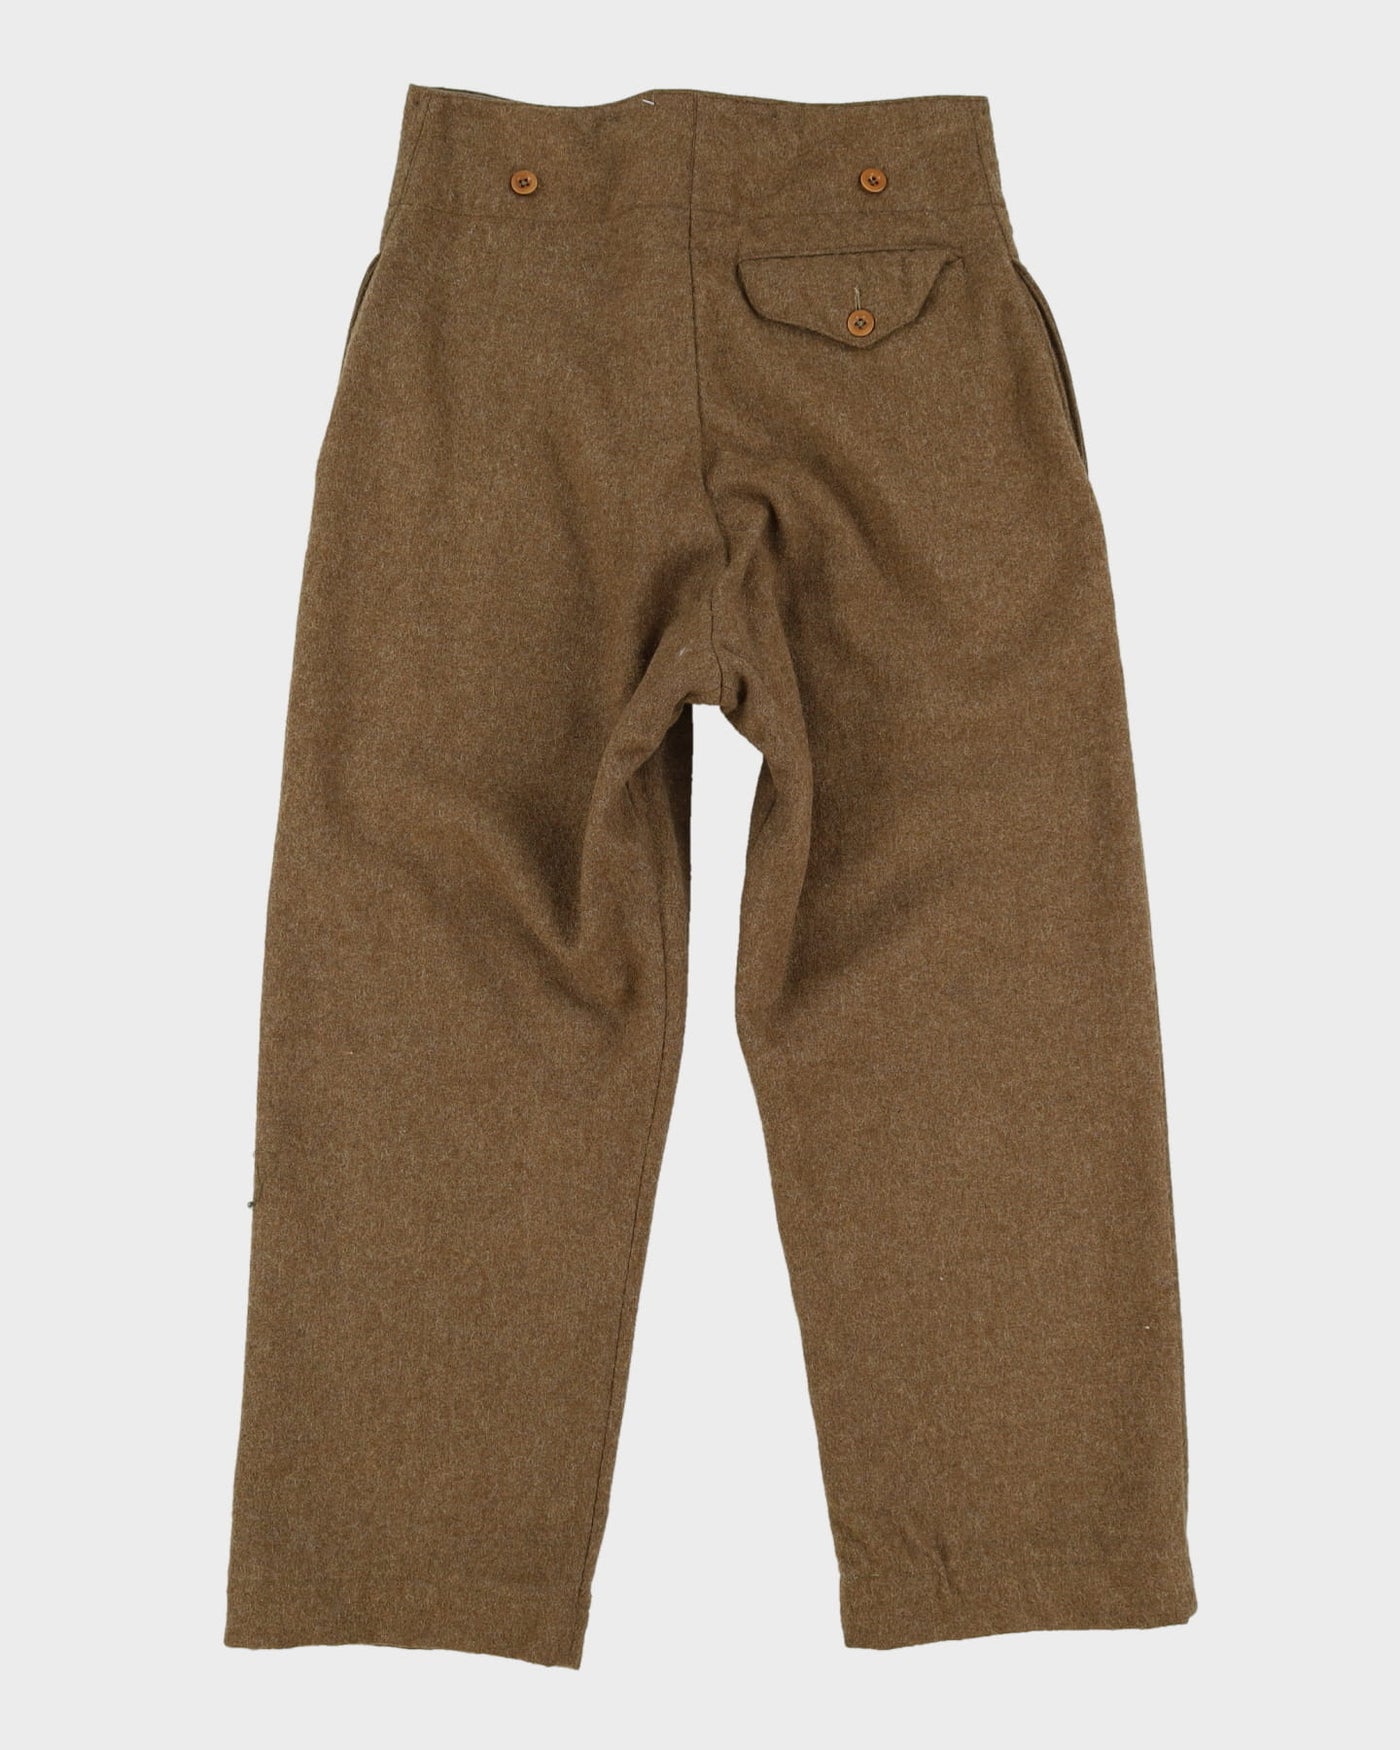 Original NOS 1940s Danish Army 1937 Pattern Battledress Wool Trousers - 32x30